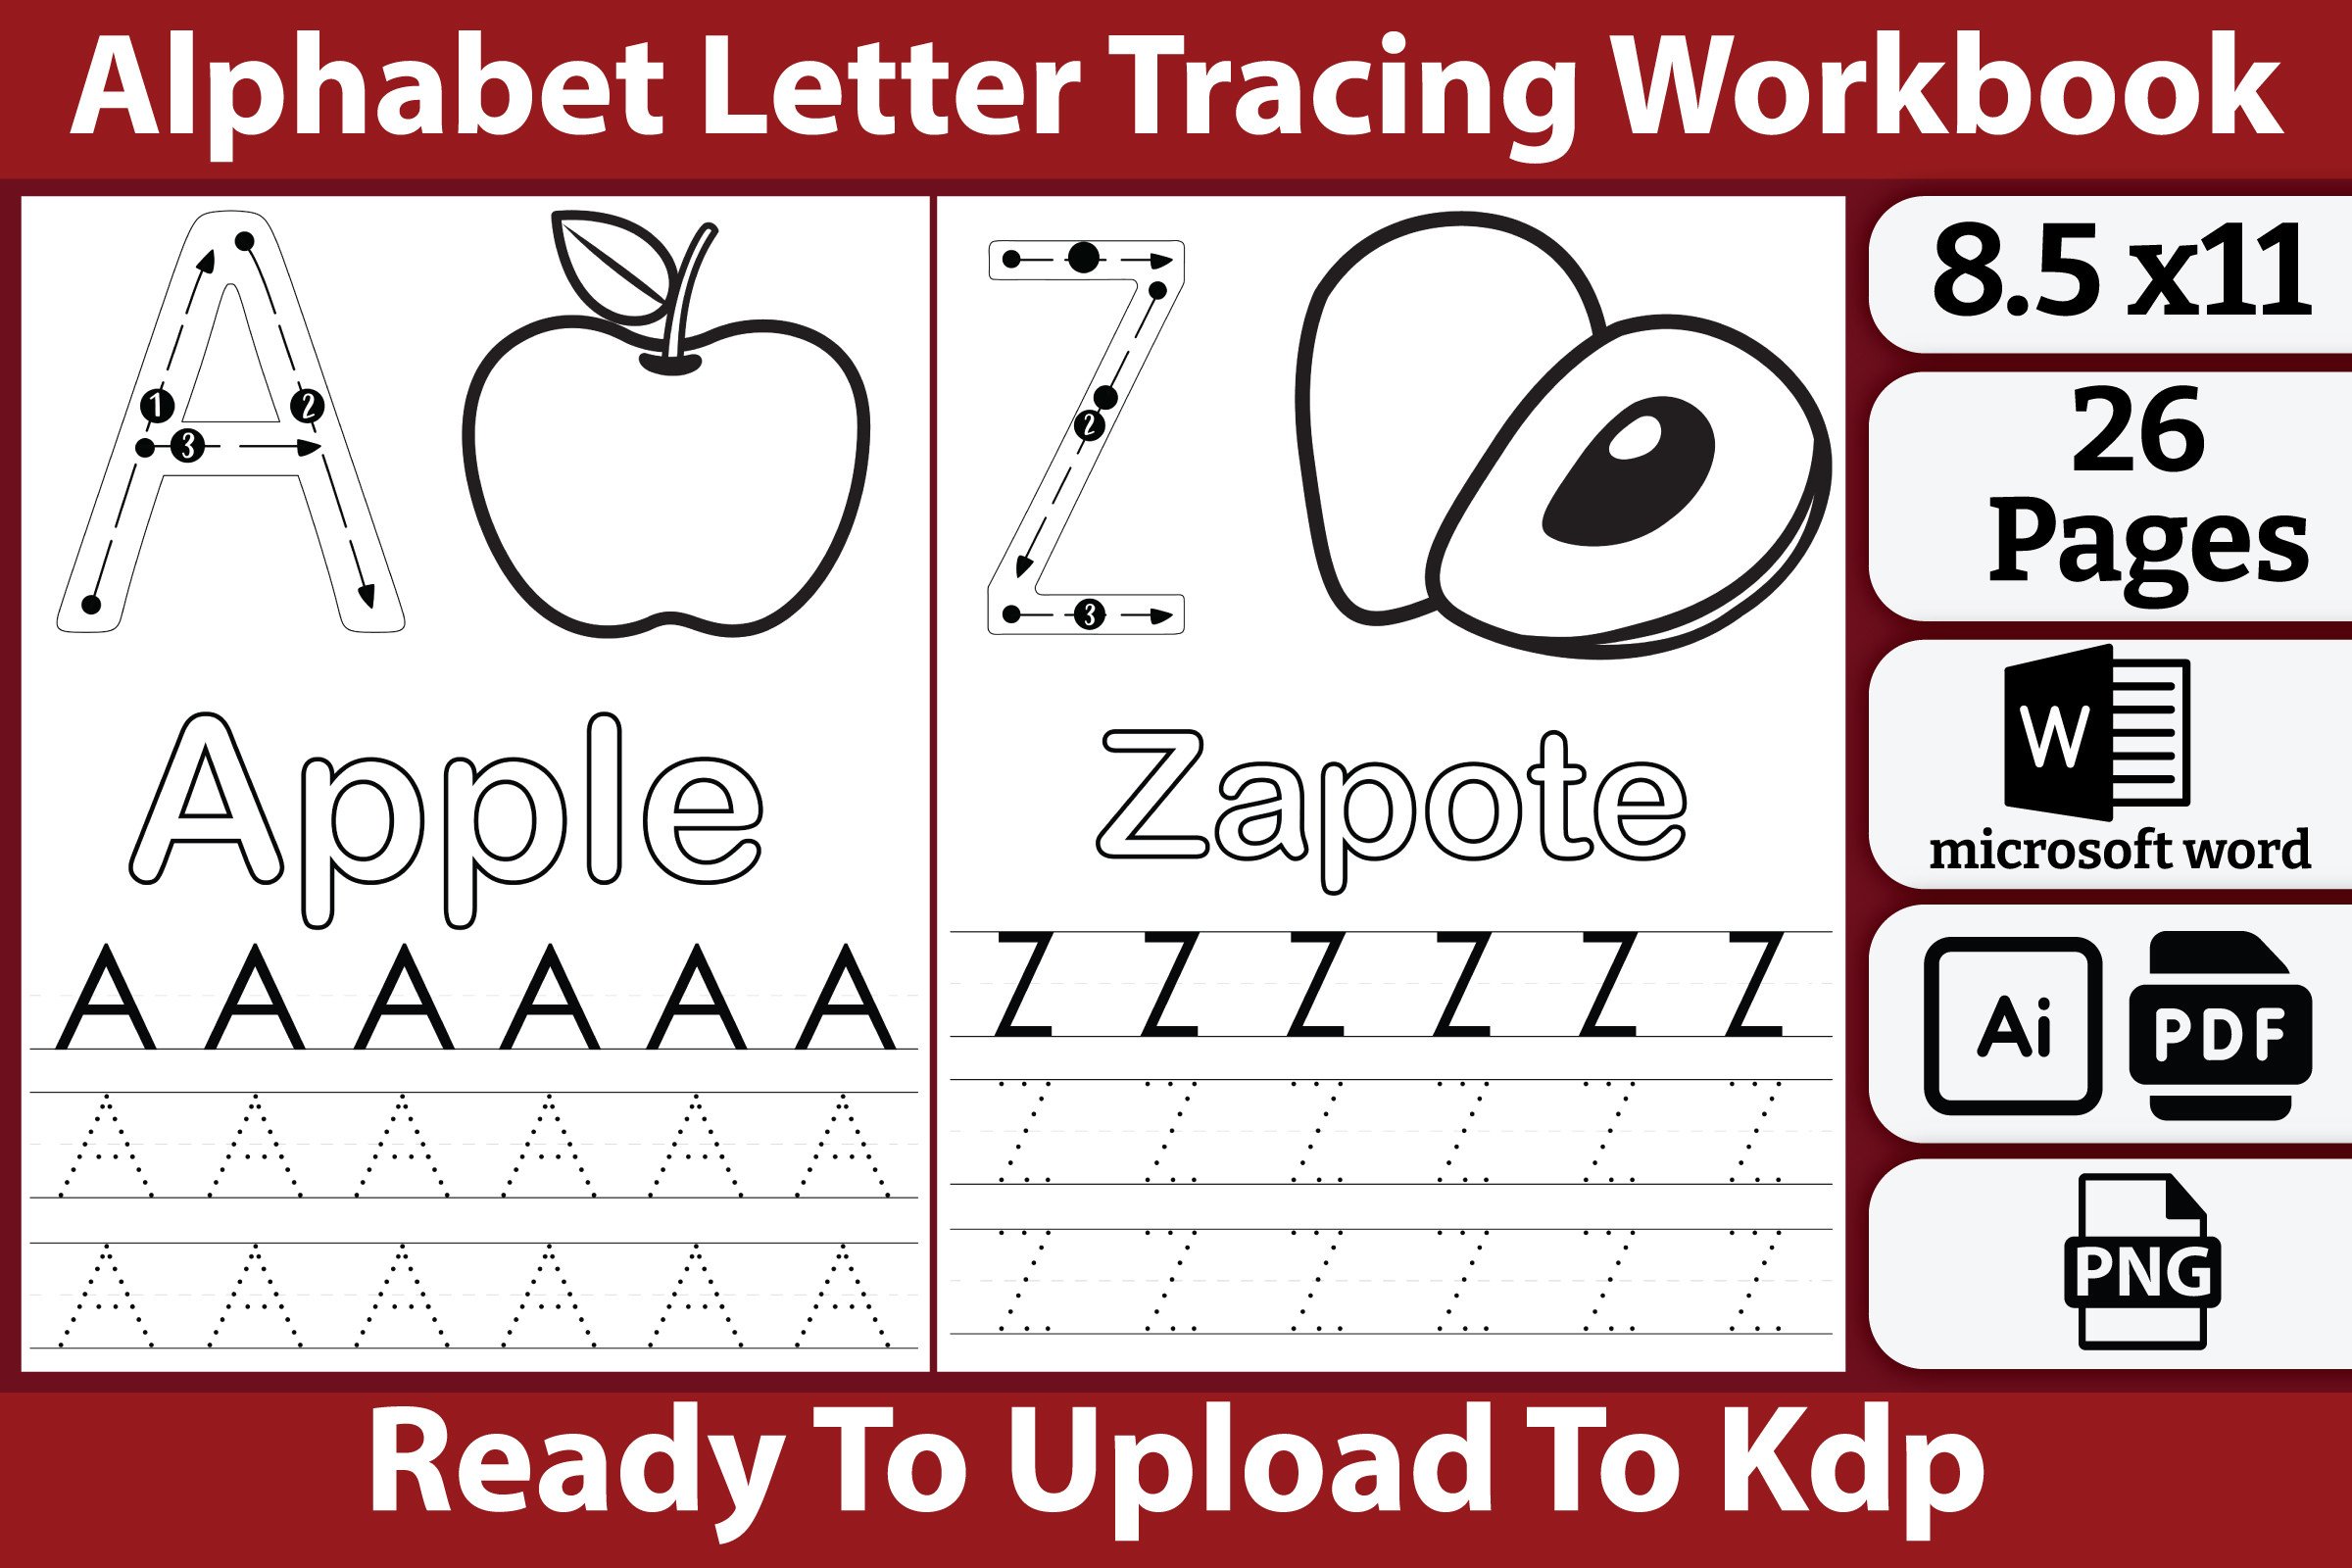 Alphabet Letter Tracing Workbook Graphic by kdpkawsarmia · Creative Fabrica